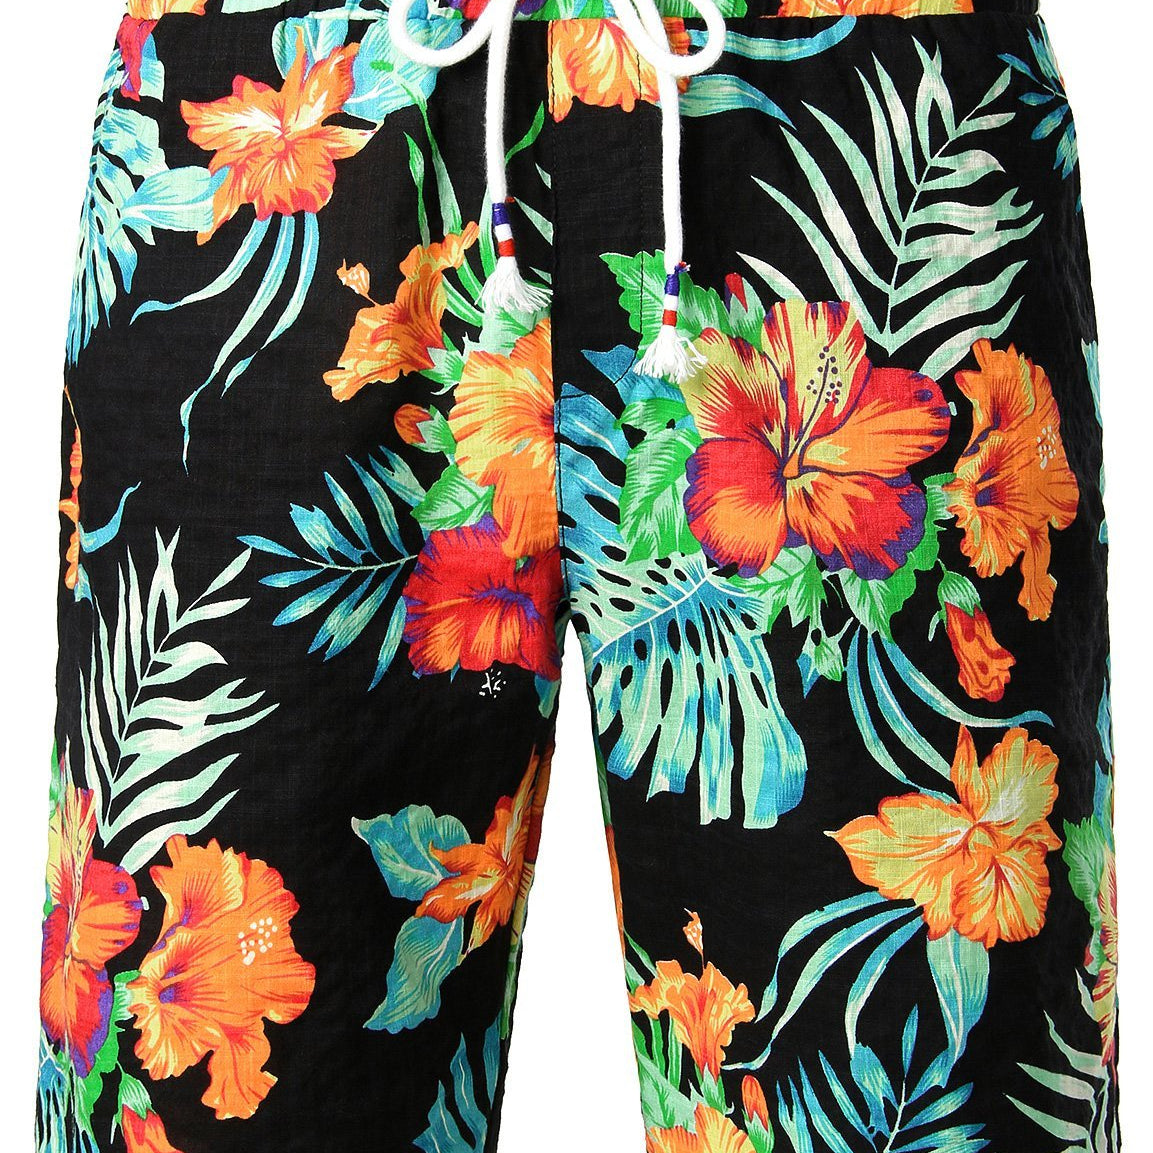 Men's Flower Flat Front Casual Aloha Hawaiian Shorts pants